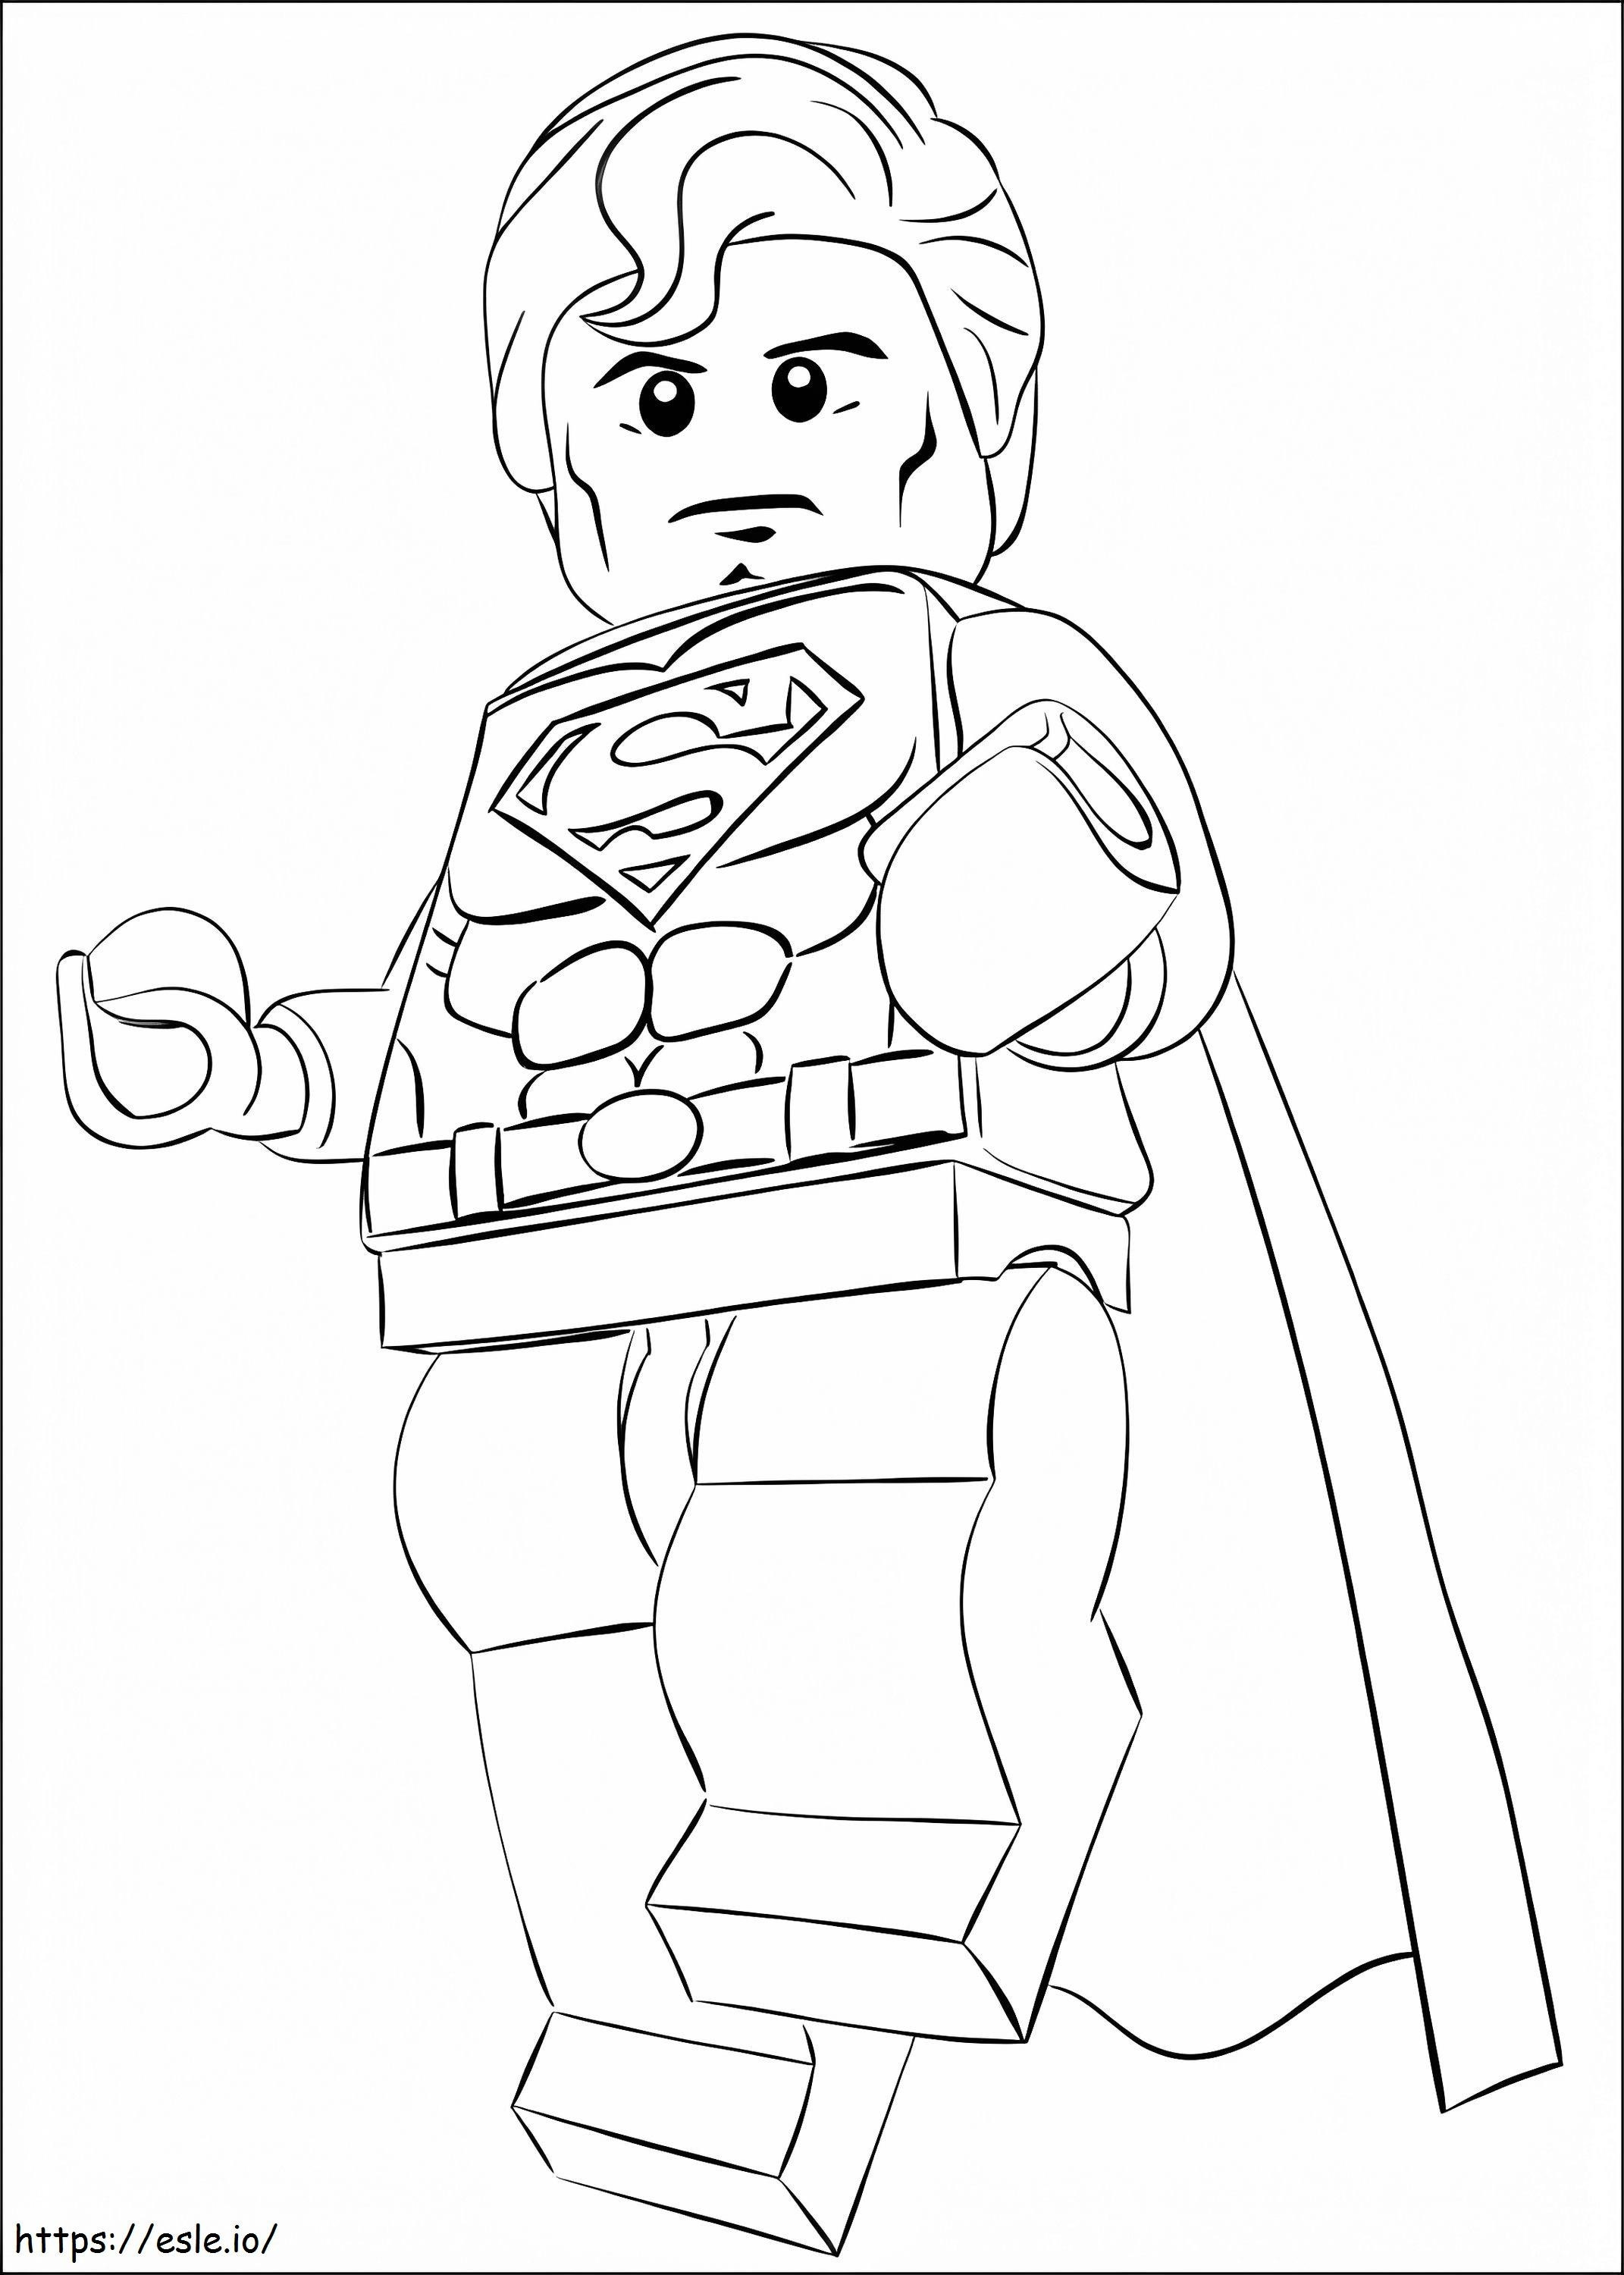 Toller Lego-Superman ausmalbilder